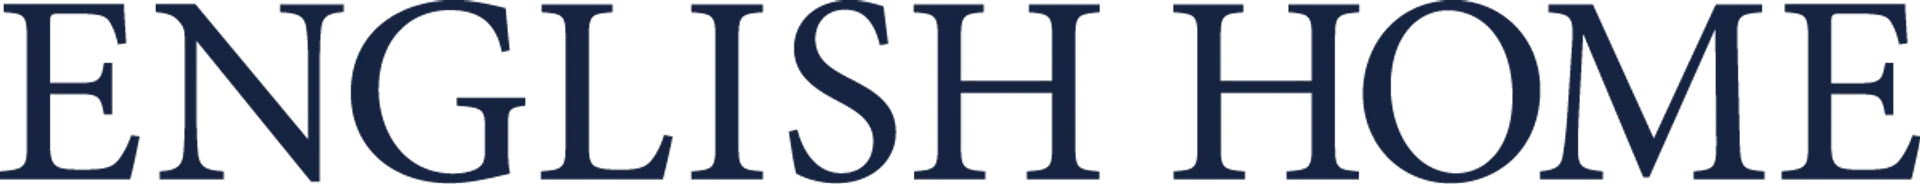 ENGLISH HOME logo